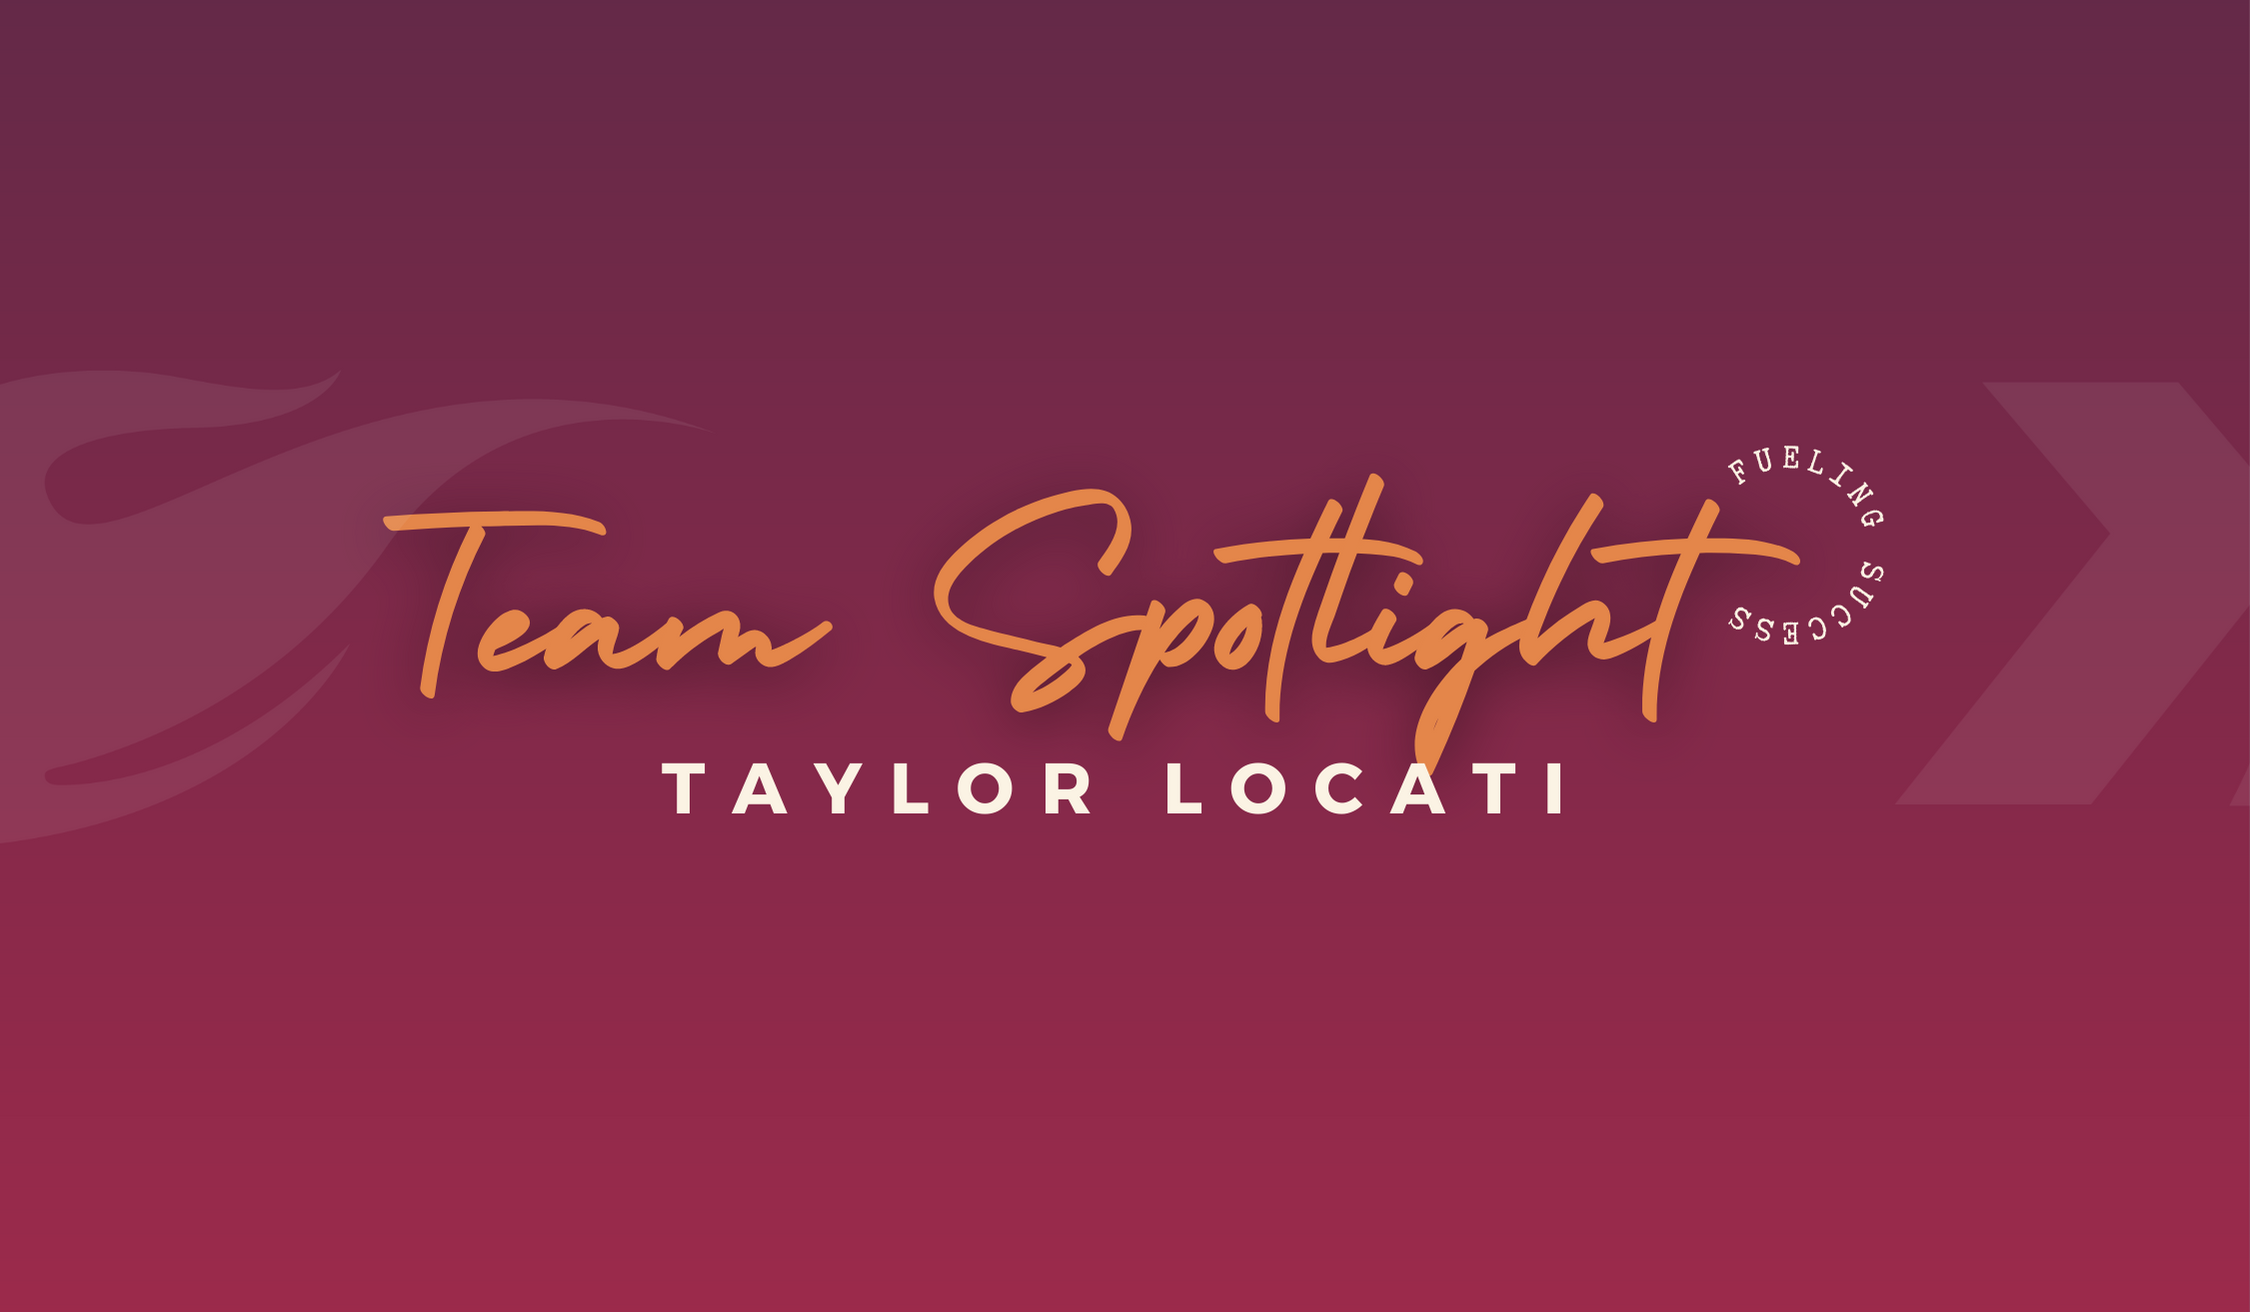 Employee Spotlight: Taylor Locati